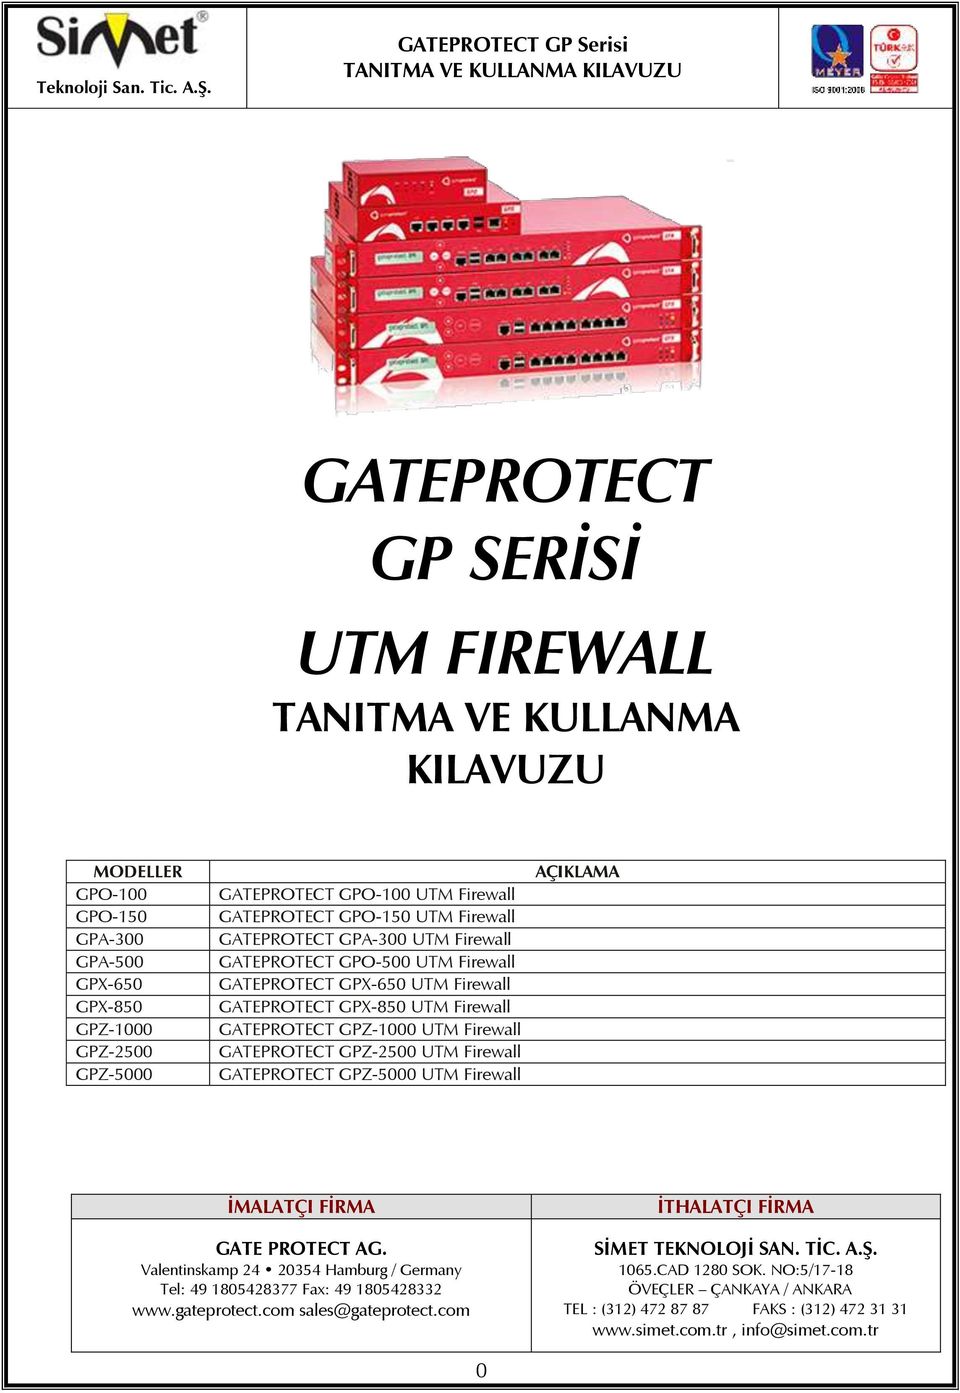 GPZ-2500 UTM Firewall GATEPROTECT GPZ-5000 UTM Firewall AÇIKLAMA İMALATÇI FİRMA GATE PROTECT AG. Valentinskamp 24 20354 Hamburg / Germany Tel: 49 1805428377 Fax: 49 1805428332 www.gateprotect.